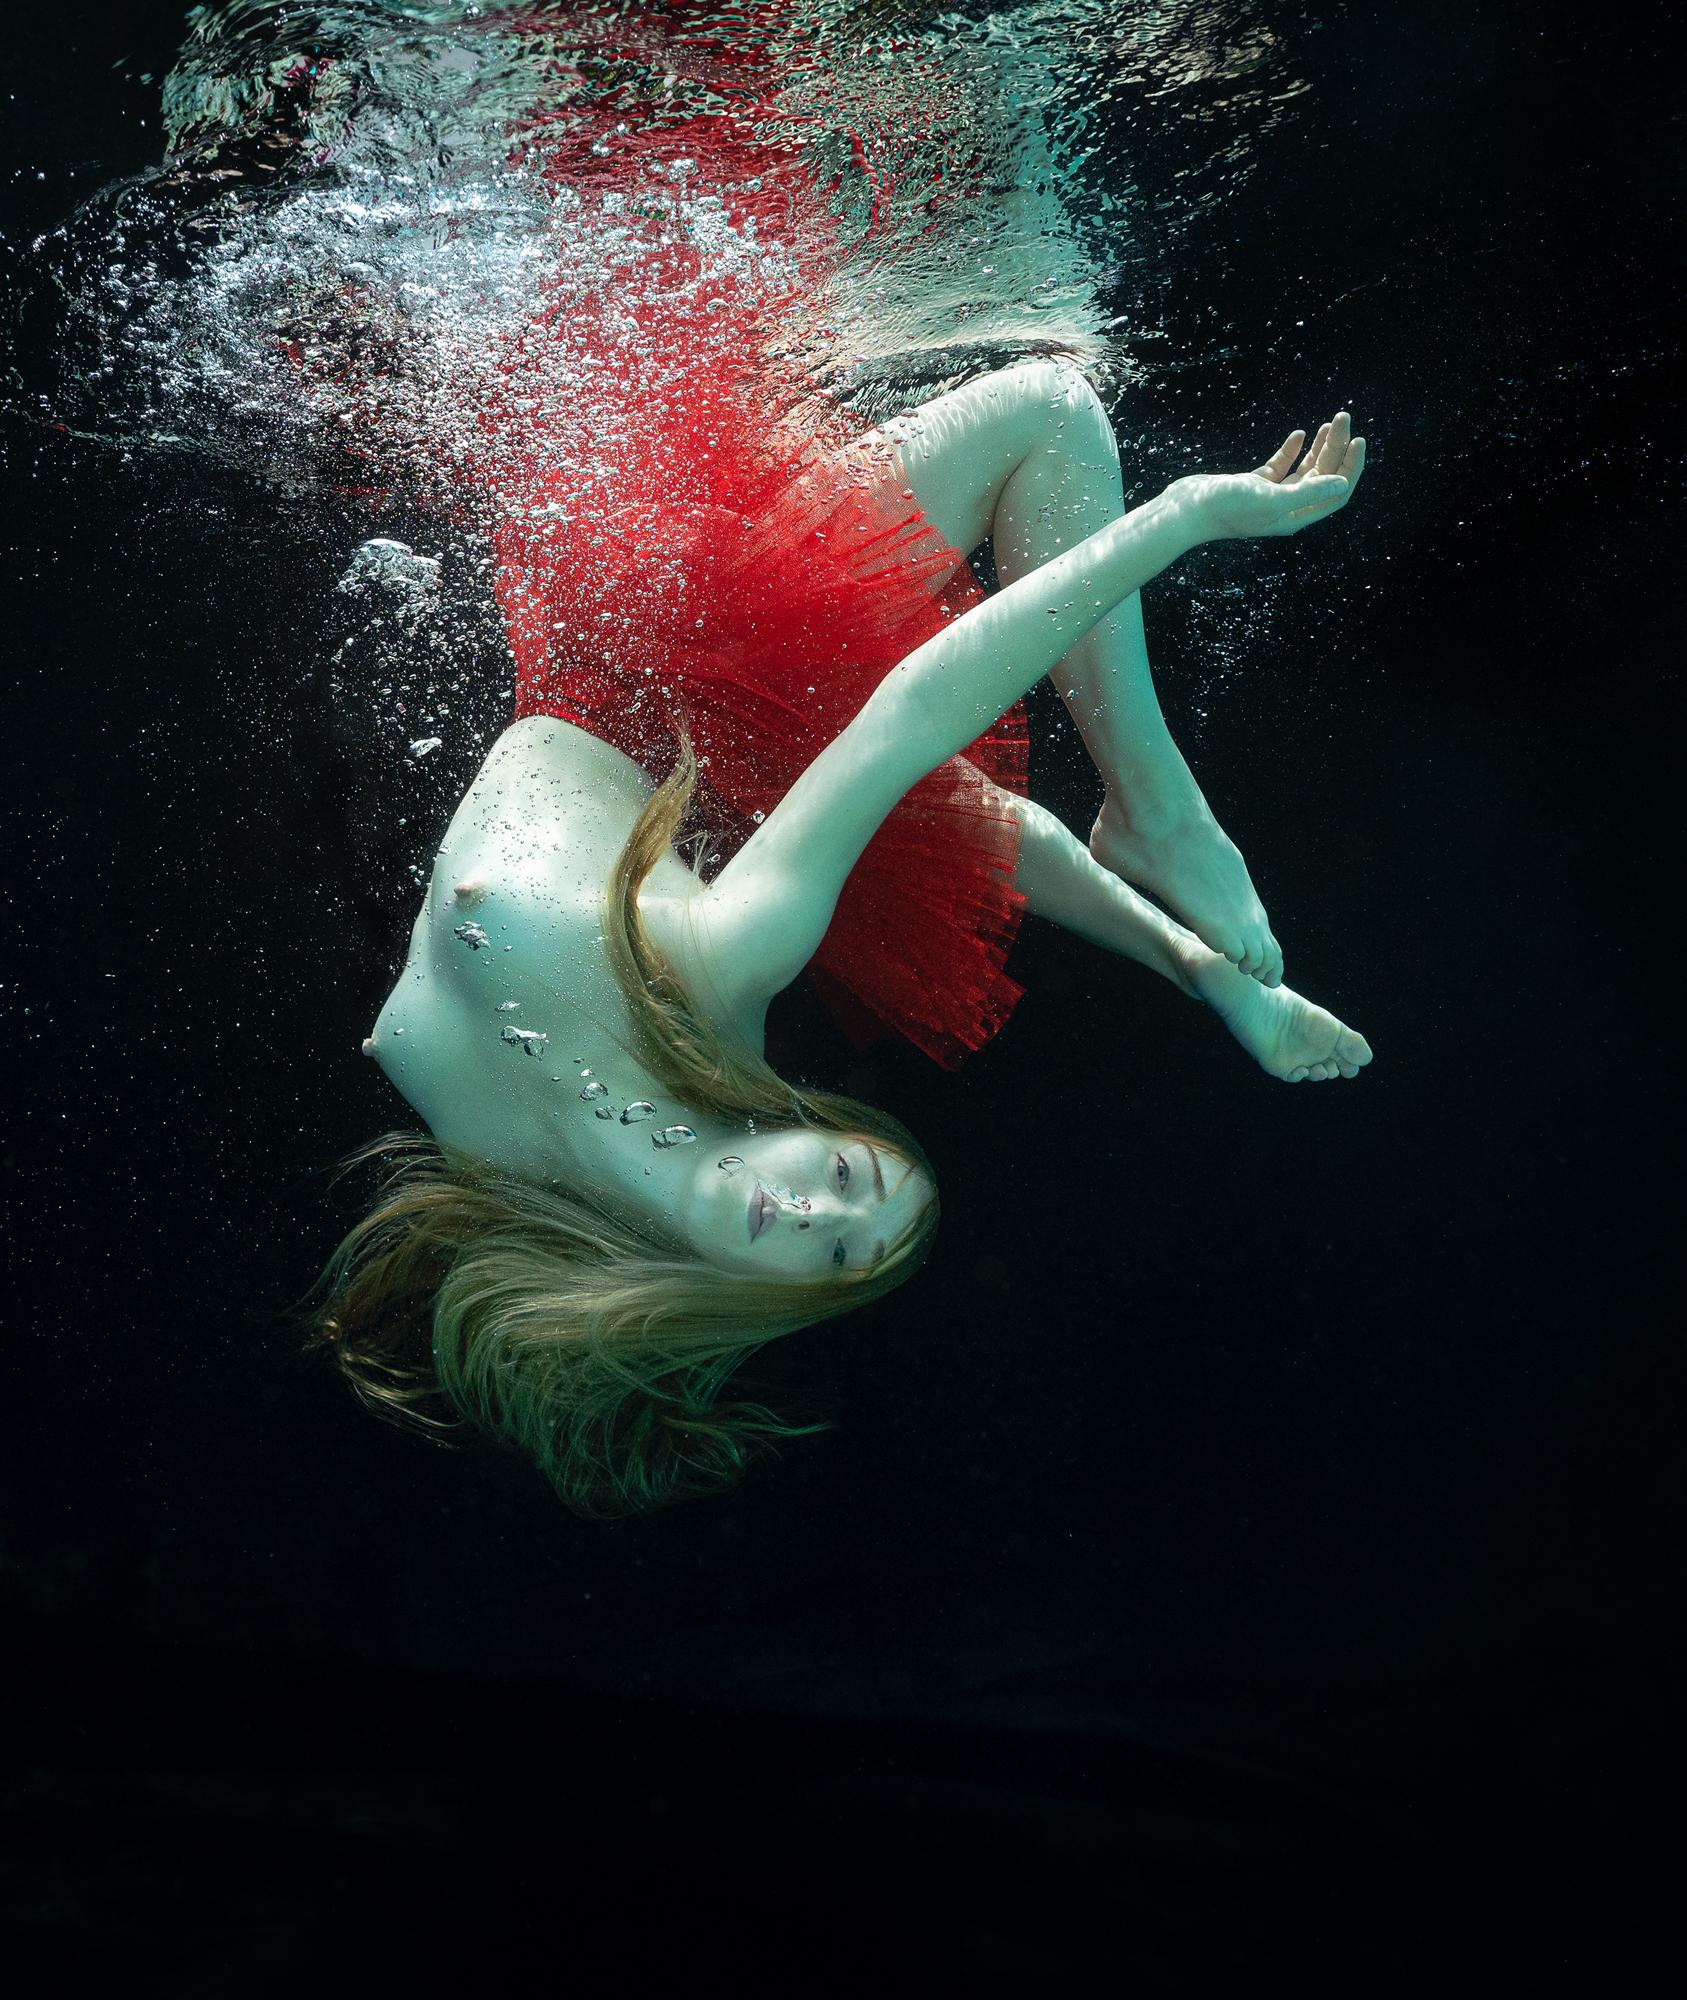 Alex Sher Figurative Photograph - Red Pretzel - underwater nude photograph - archival pigment print